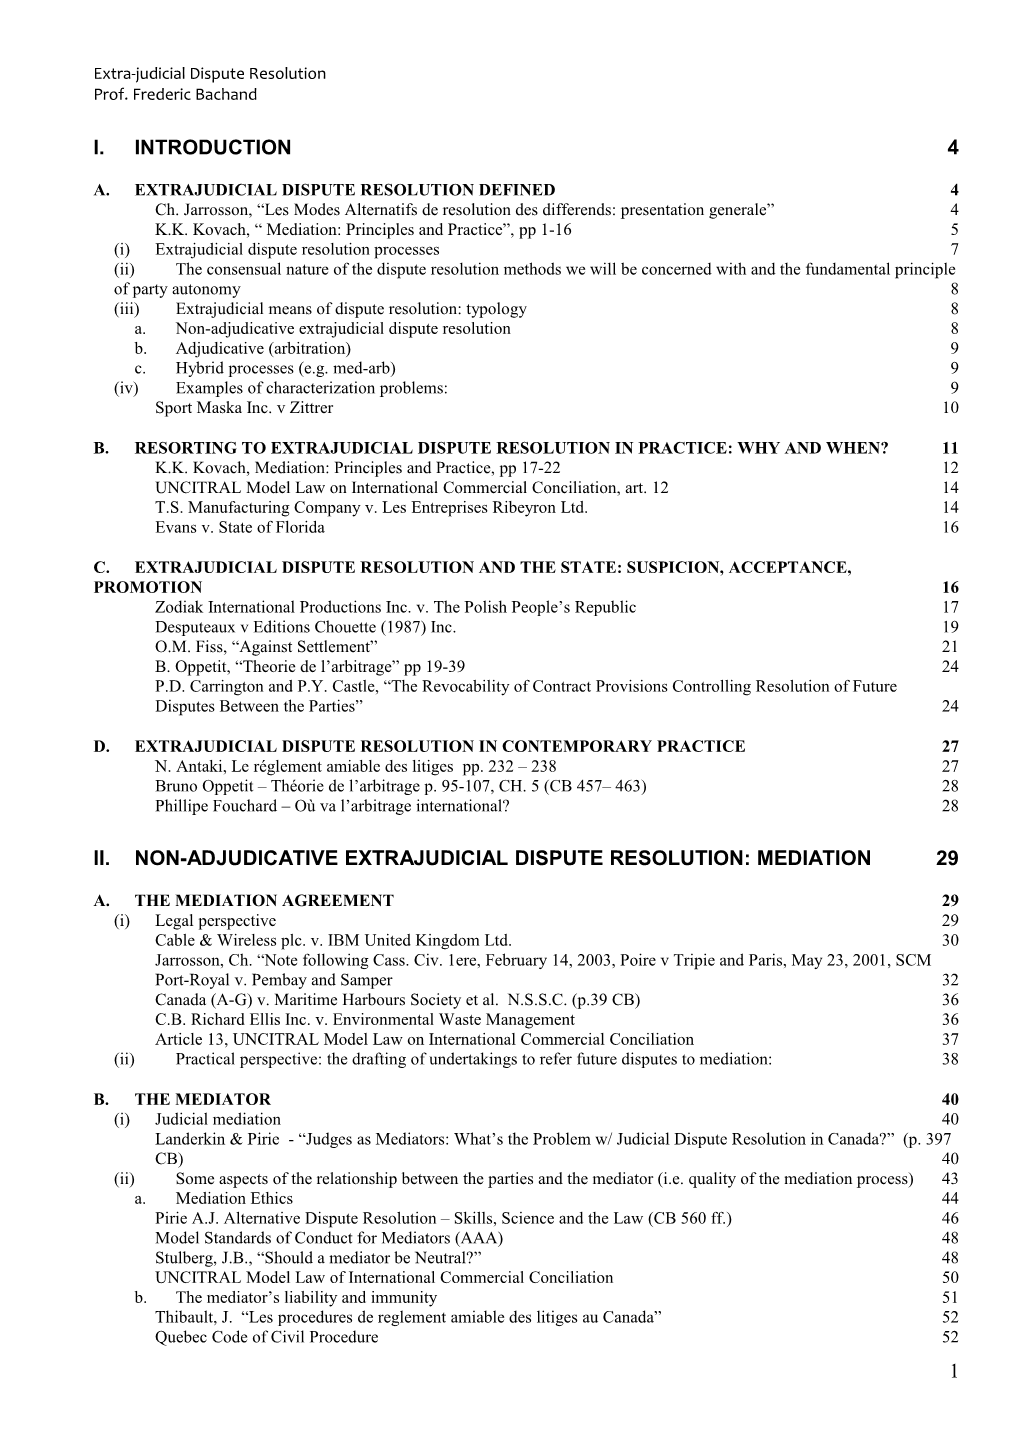 A.Extrajudicial Dispute Resolution Defined